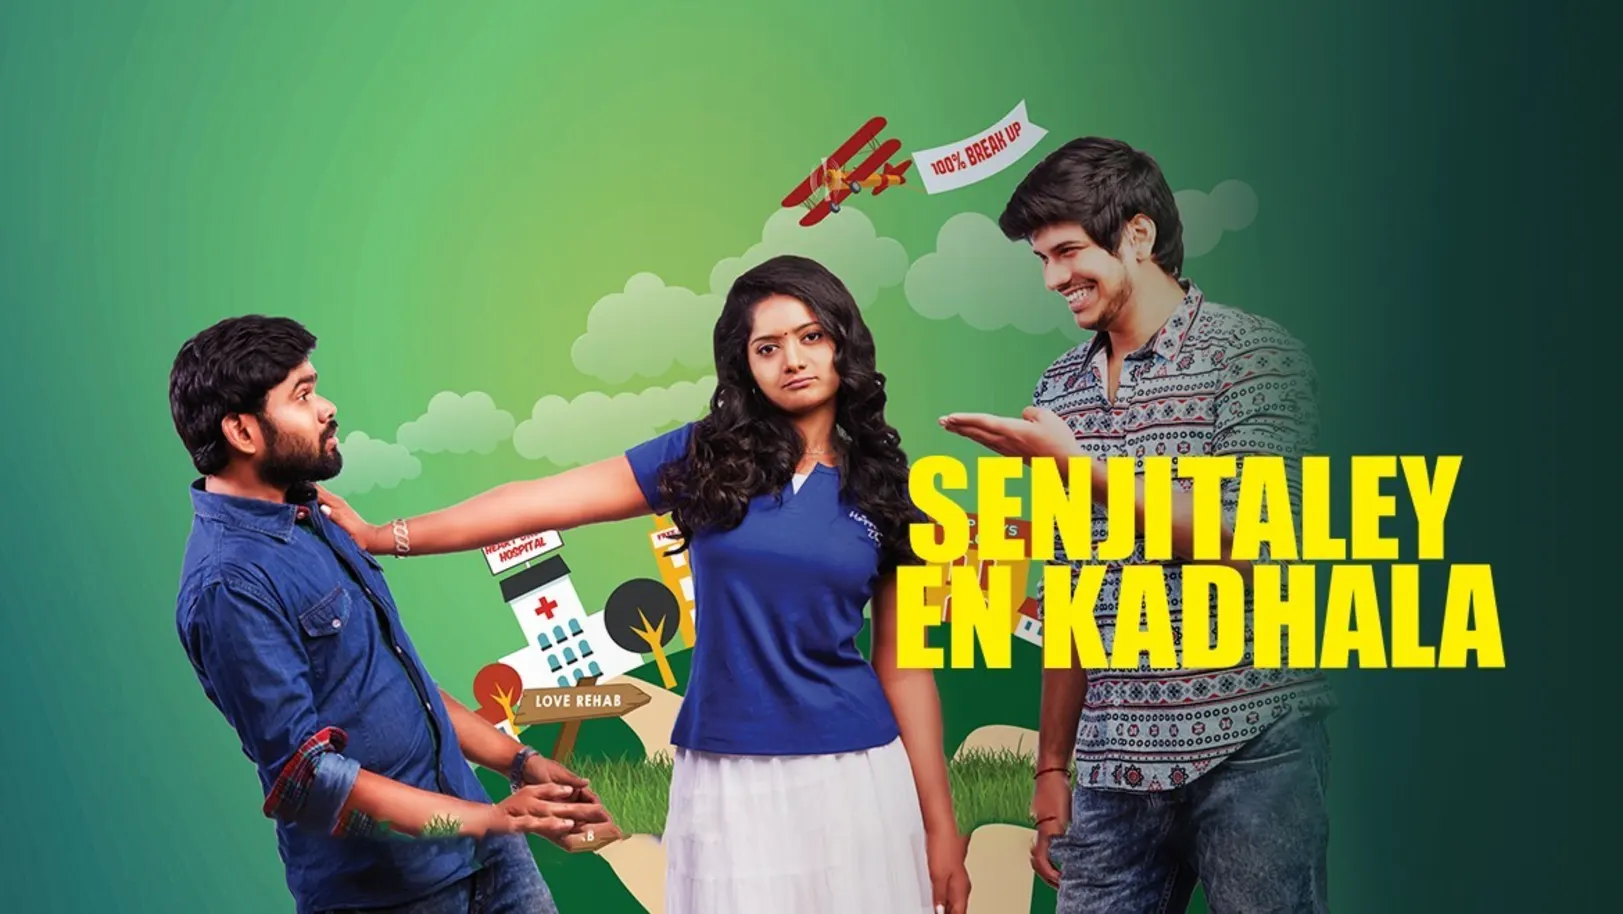 Senjittale En Kadhala Movie